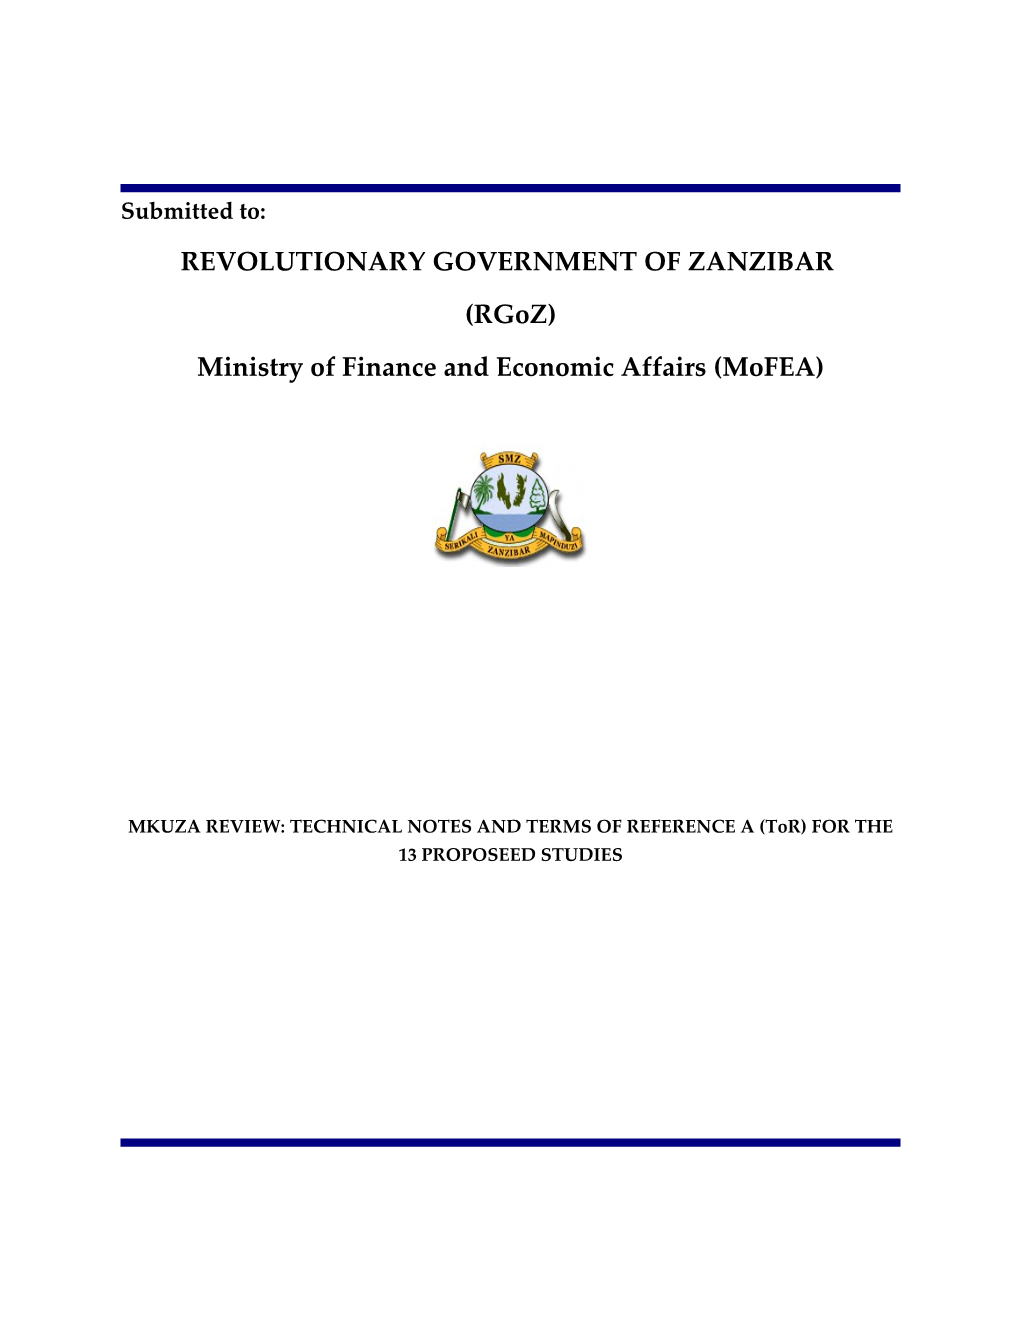 REVOLUTIONARY GOVERNMENT of ZANZIBAR (Rgoz)